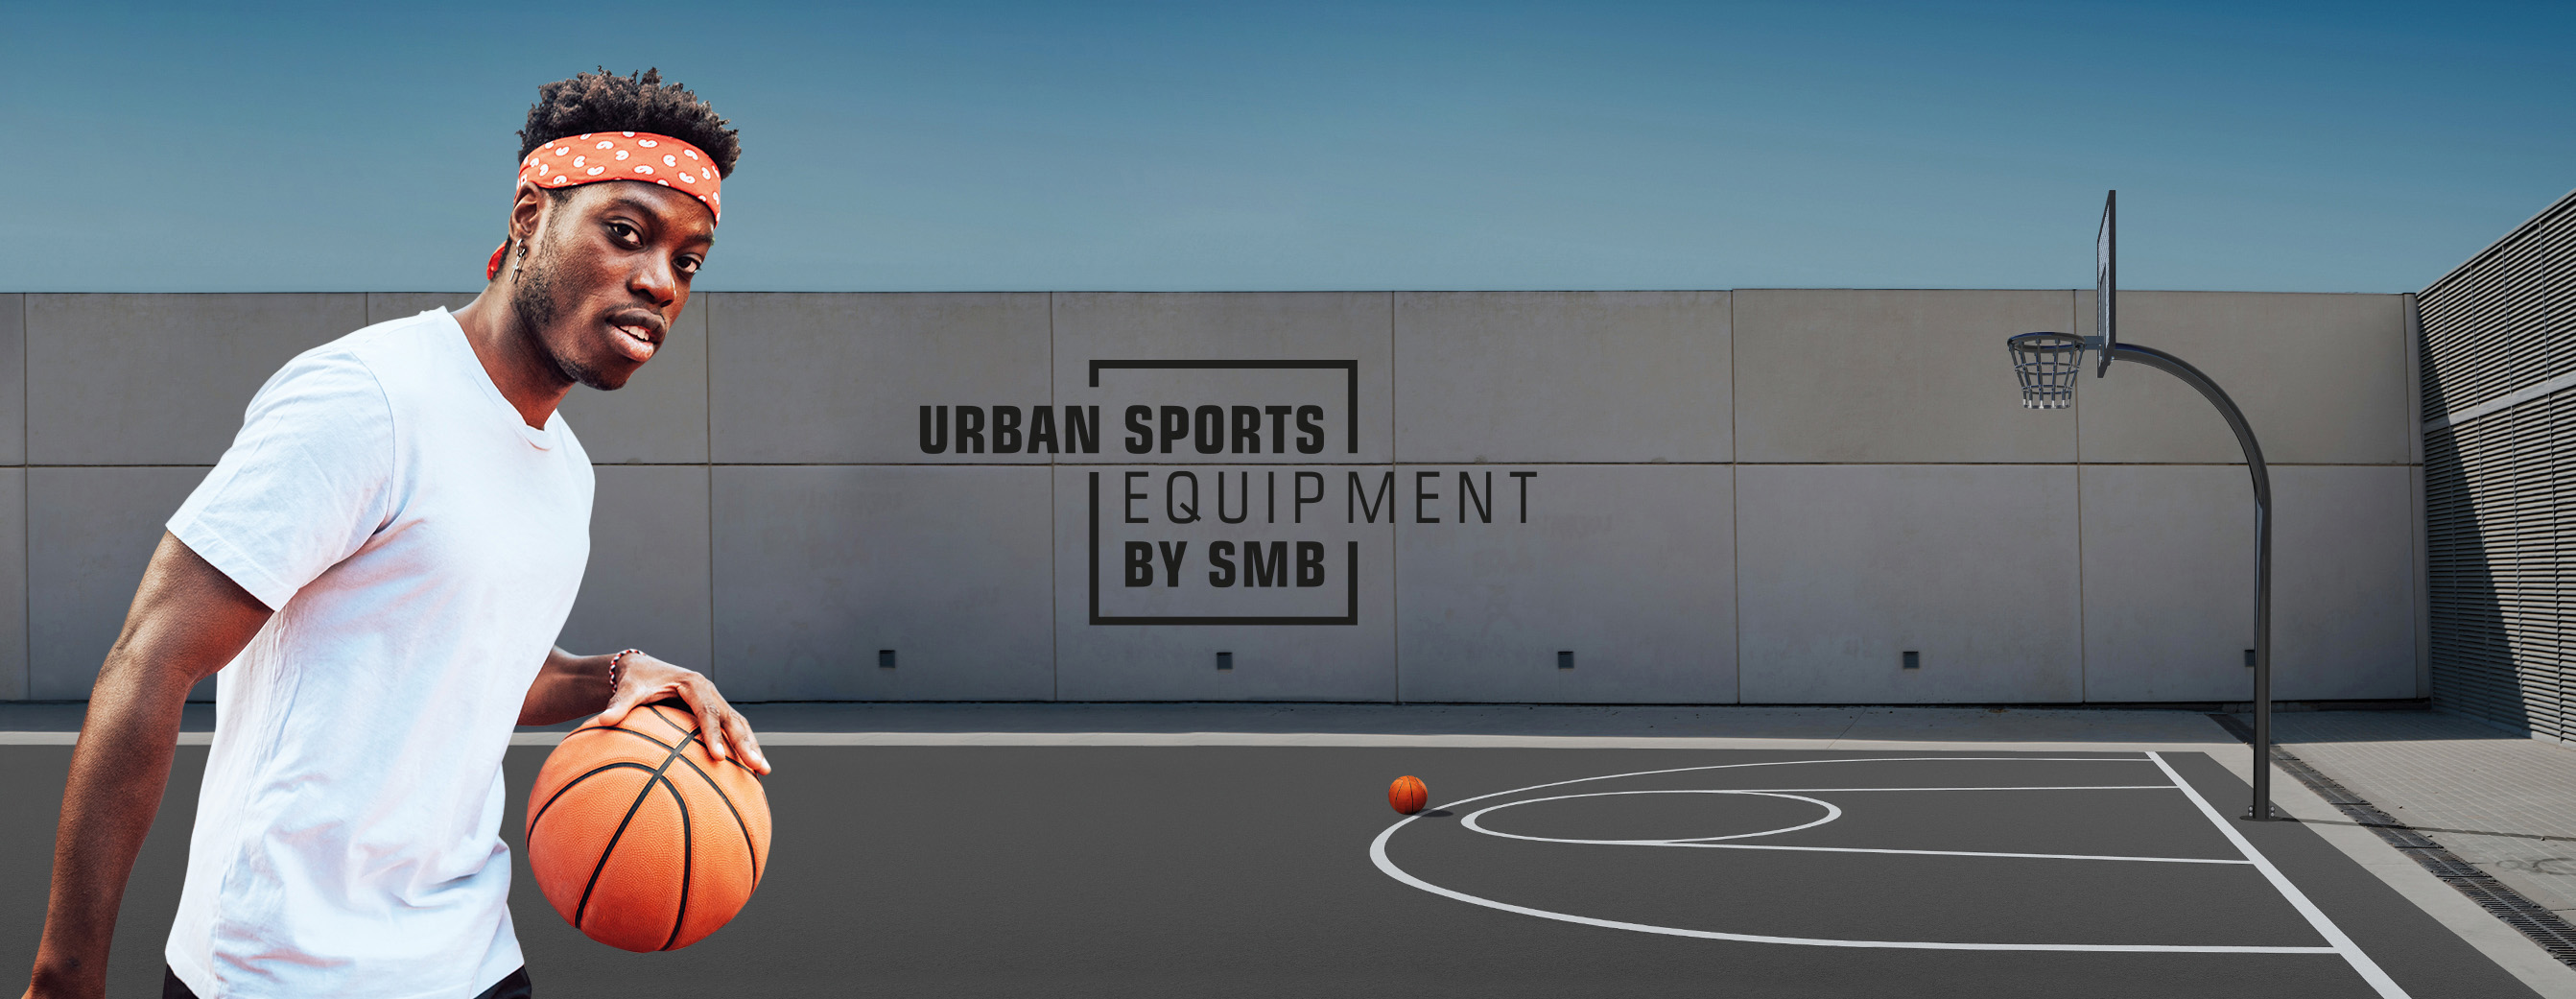 Productgroup_Urban_Sports_Equipment